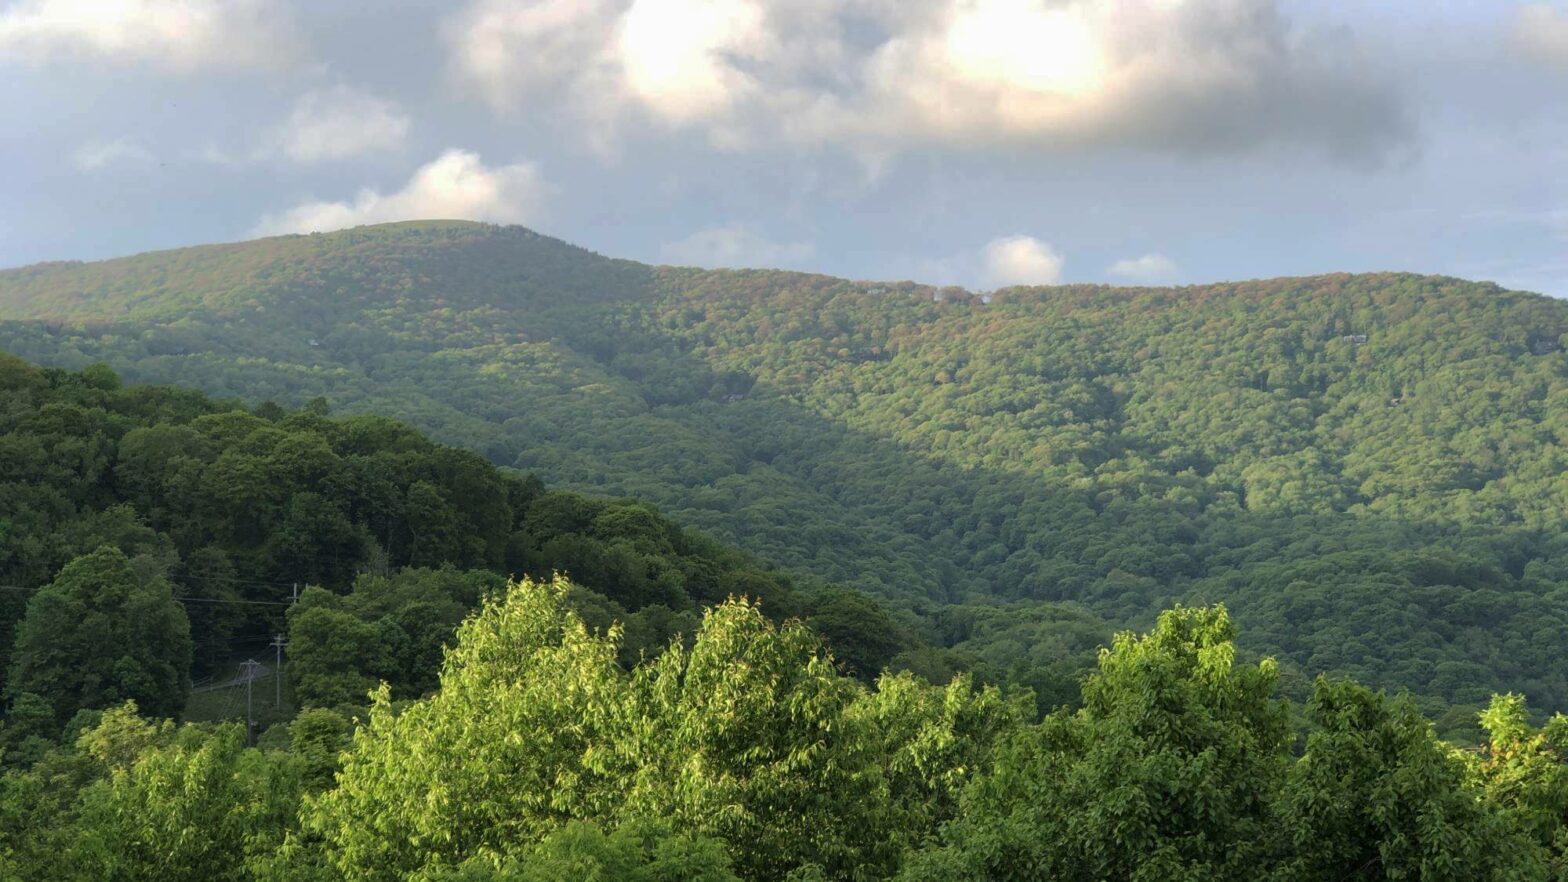 Big Bald Mountain on the Appalachian Trail